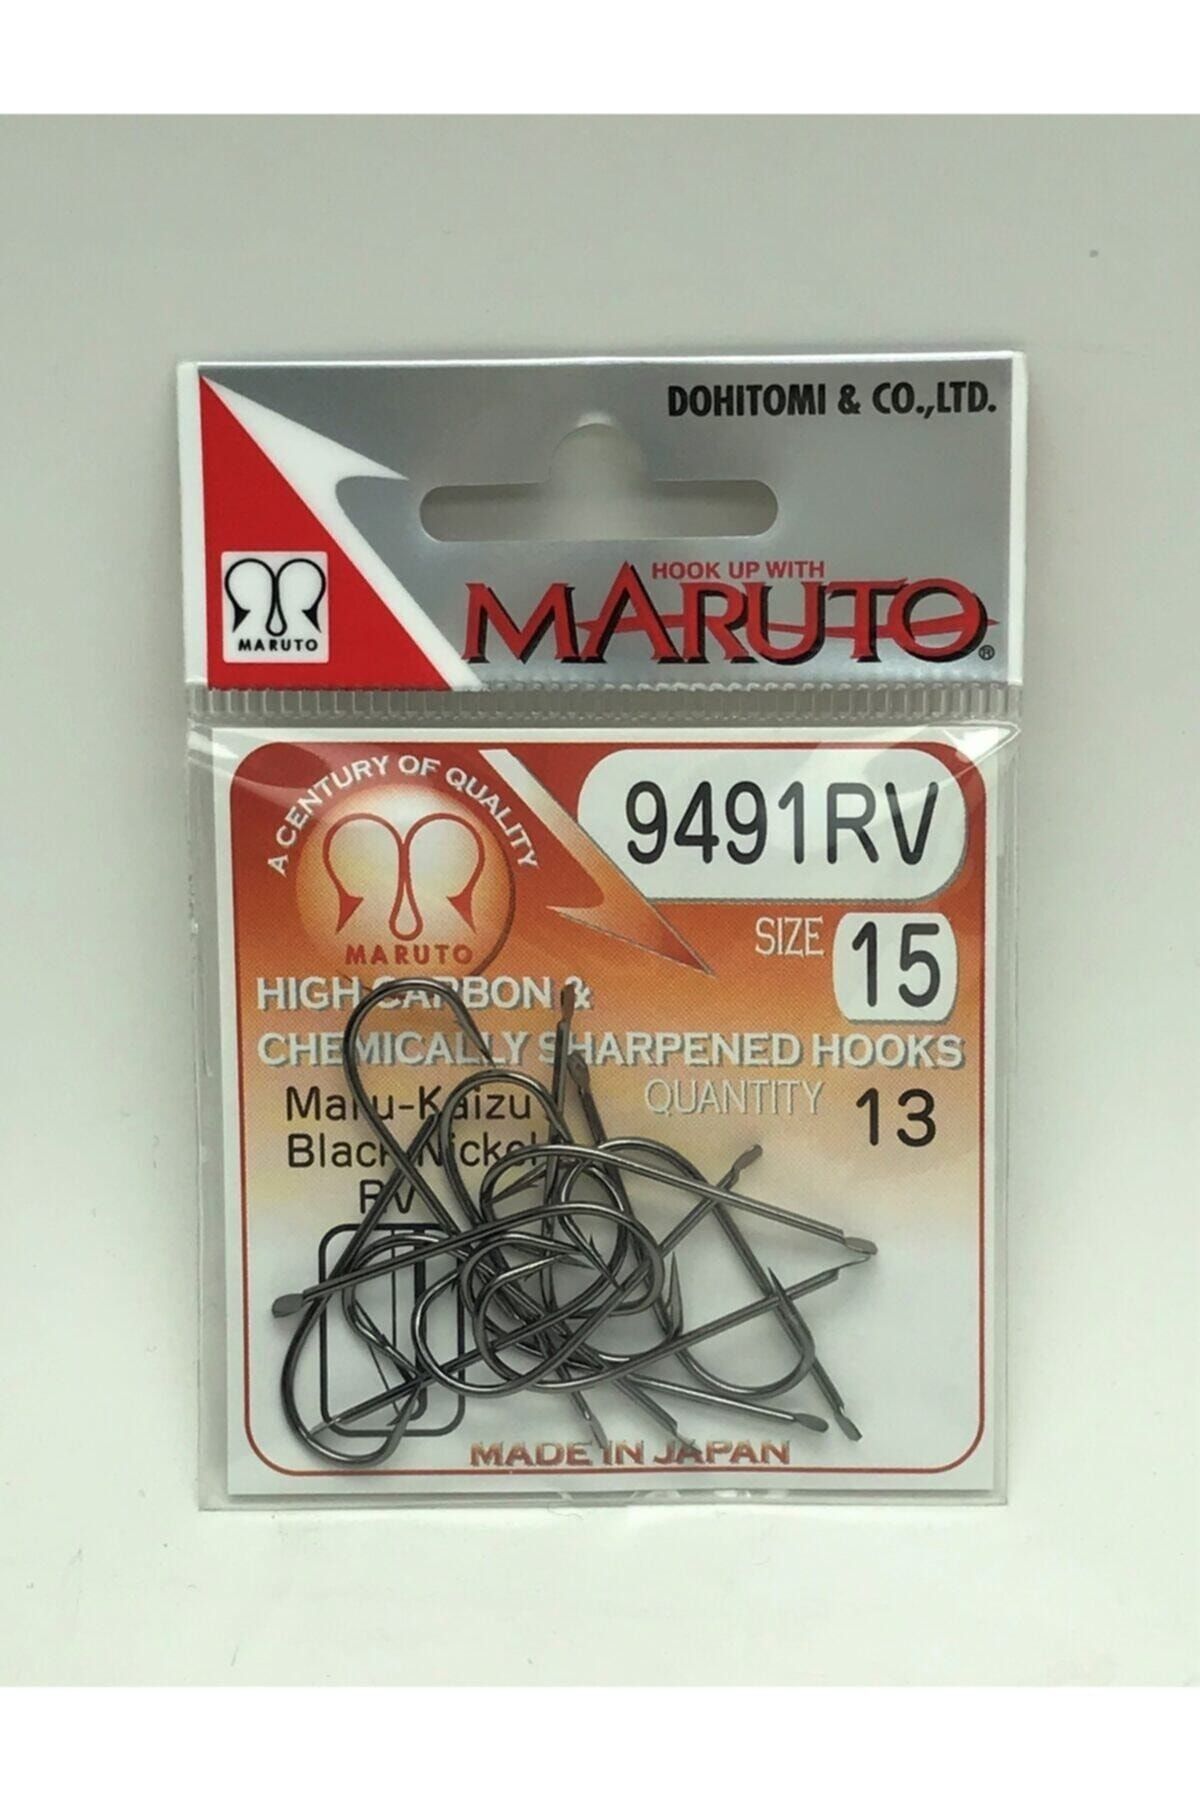 Maruto 9491 Rv  12 Numara Iğne